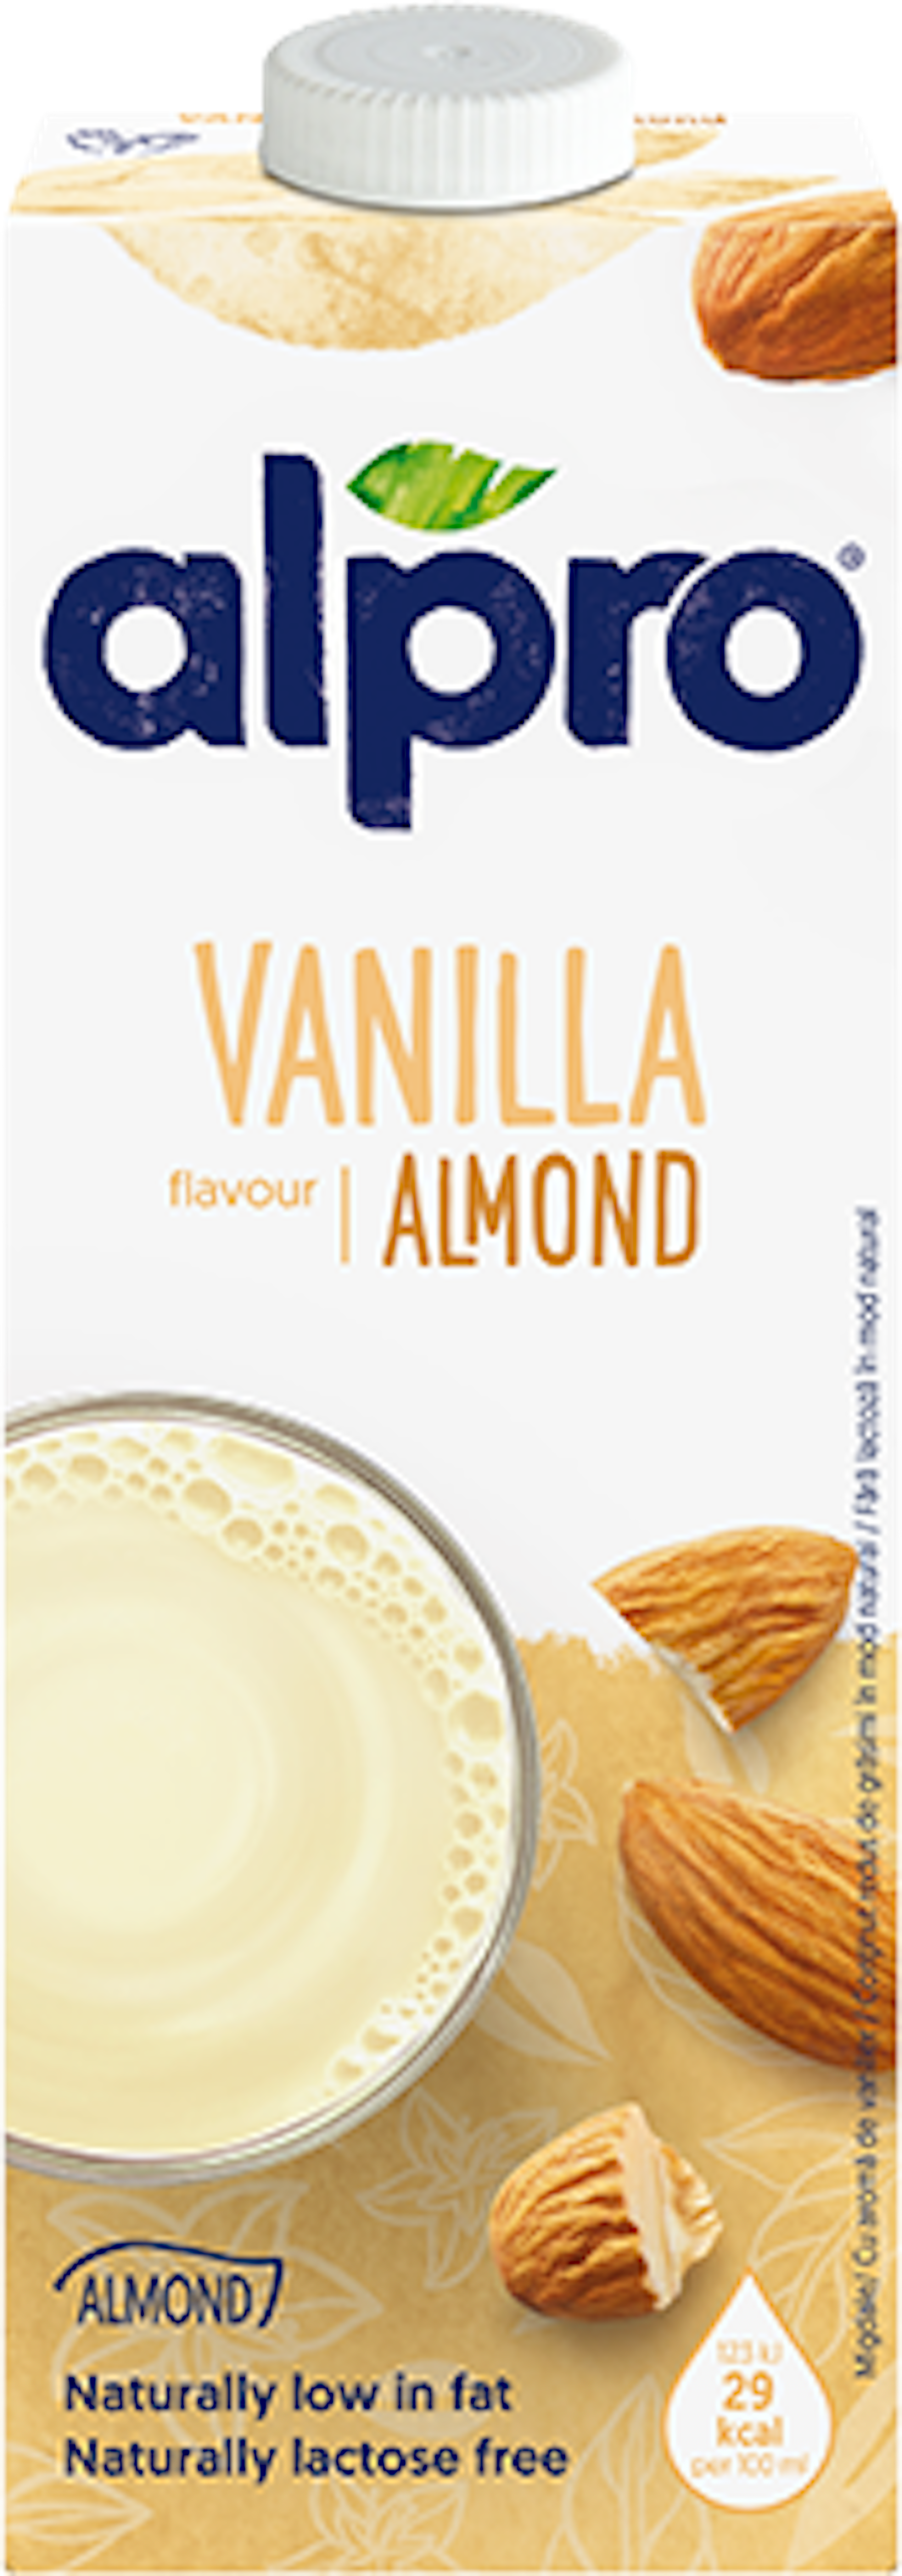 Alpro mandlový nápoj vanilka